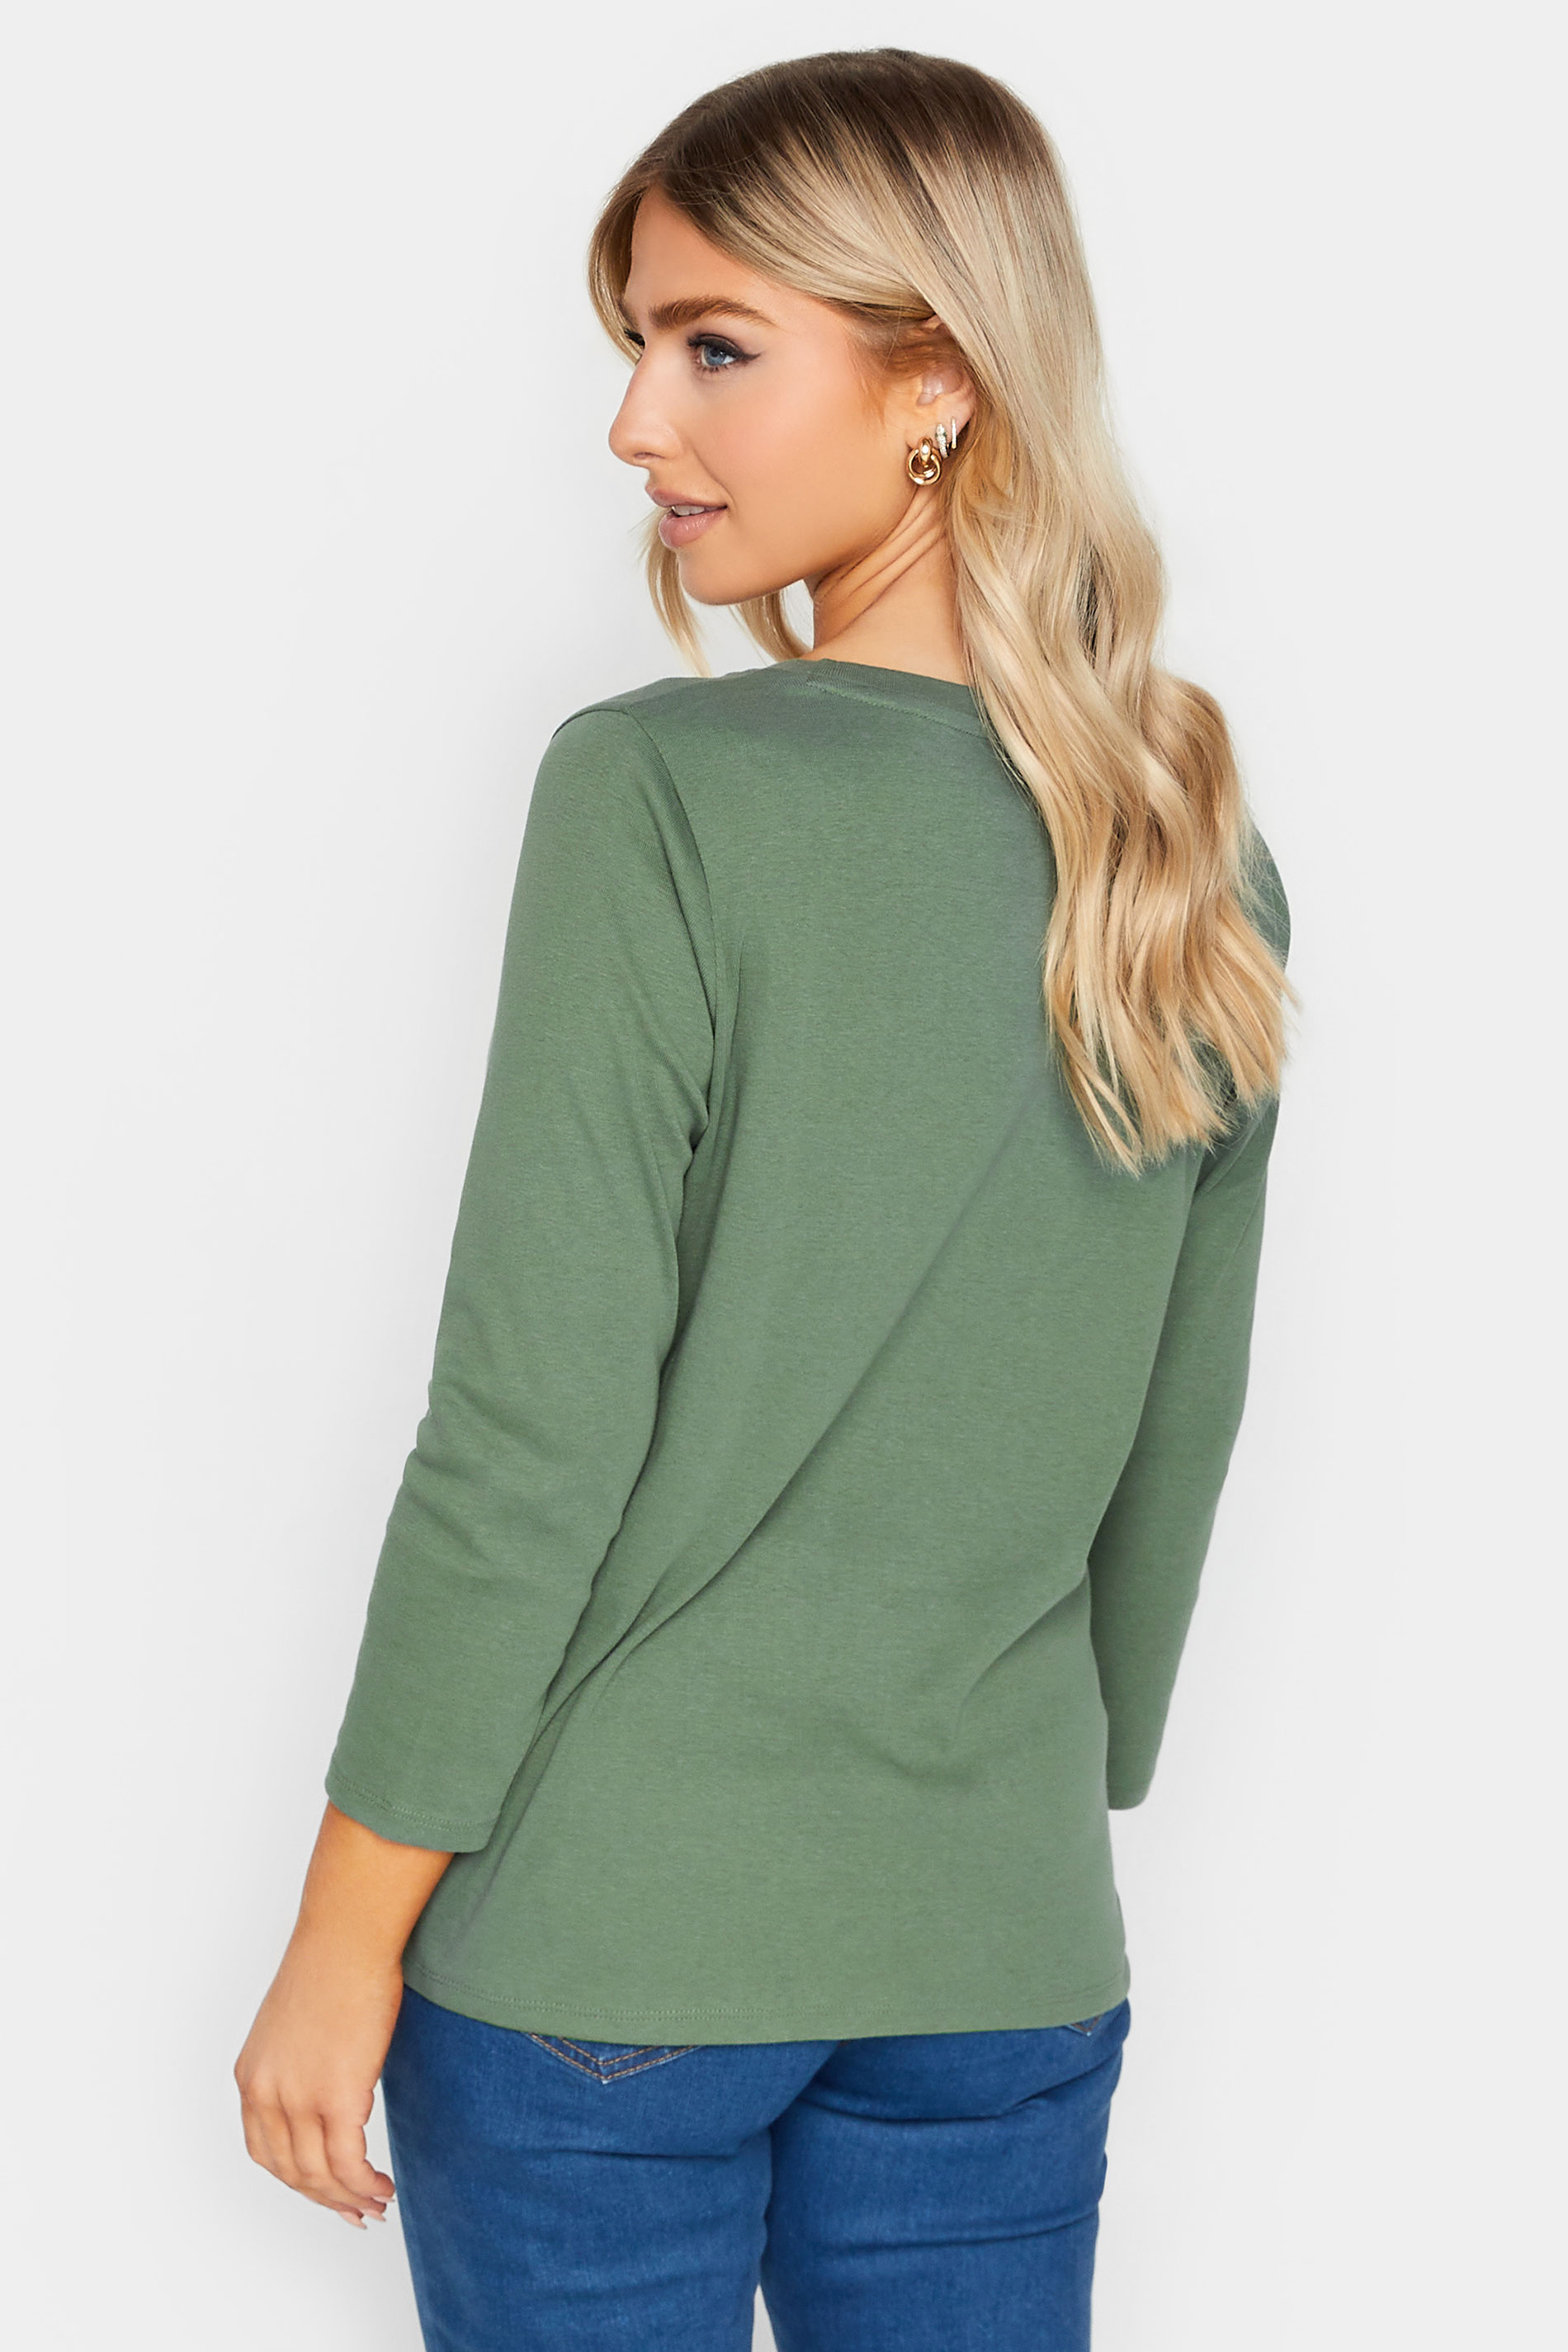 M&Co Green Long Sleeve Cotton Blend Top | M&Co  3